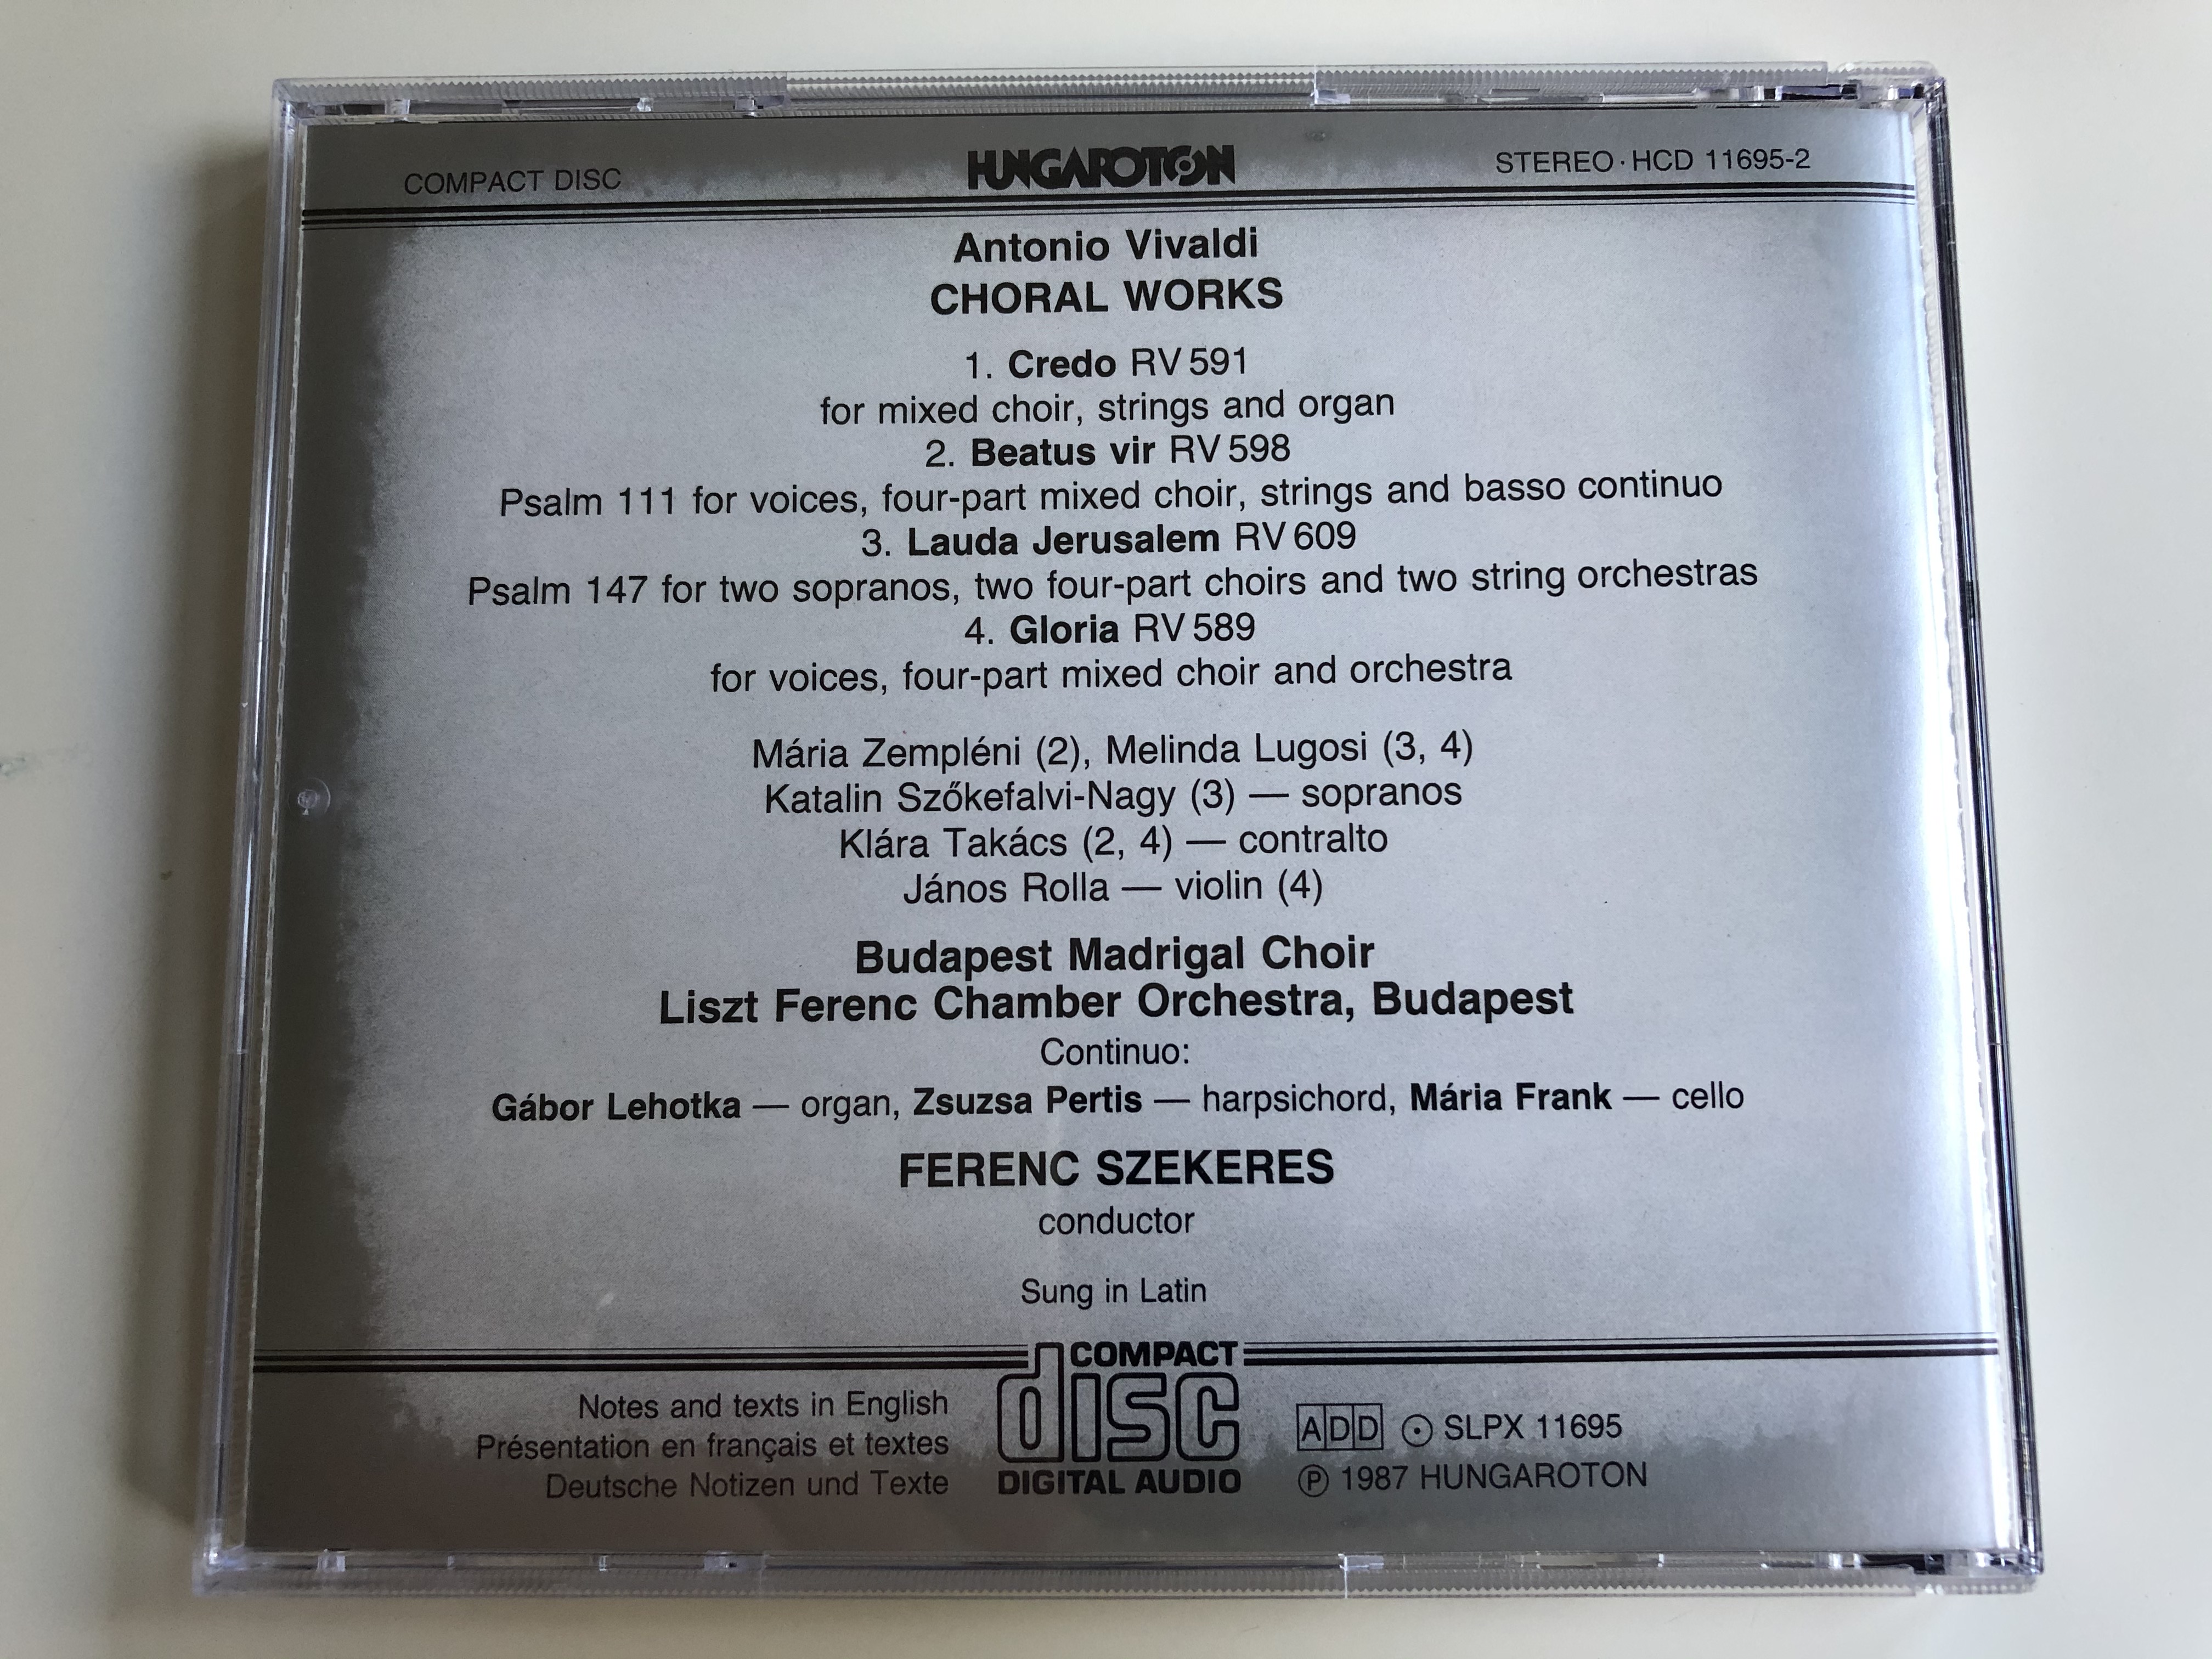 vivaldi-choral-works-credo-beatus-vir-gloria-lauda-jerusalem-budapest-madrigal-choir-liszt-ferenc-chamber-orchestra-budapest-ferenc-szekeres-hungaroton-classic-audio-cd-1994-stere-8-.jpg